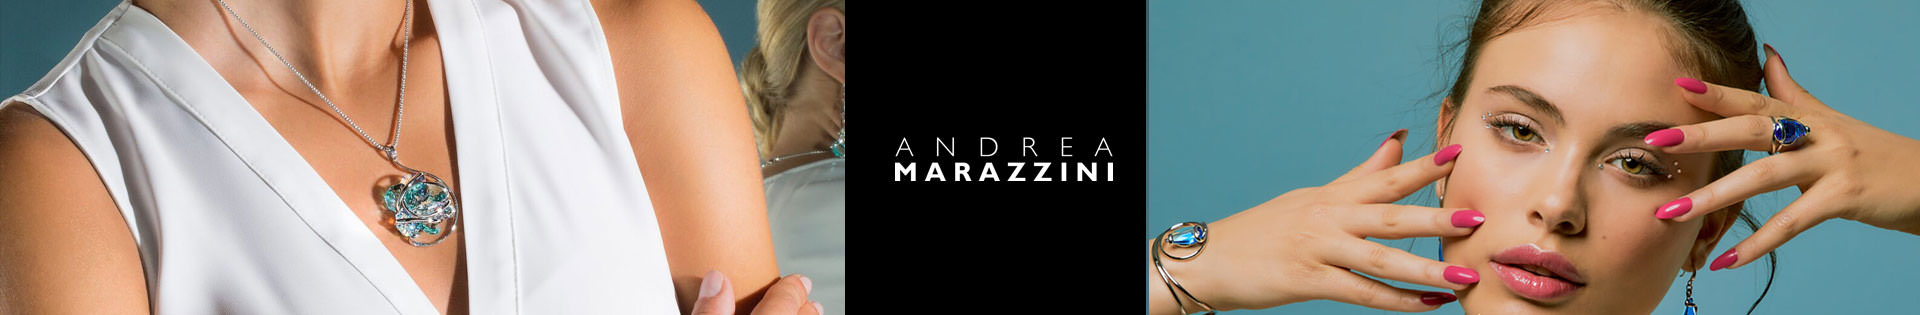 Boucles d'oreille - Andrea Marazzini